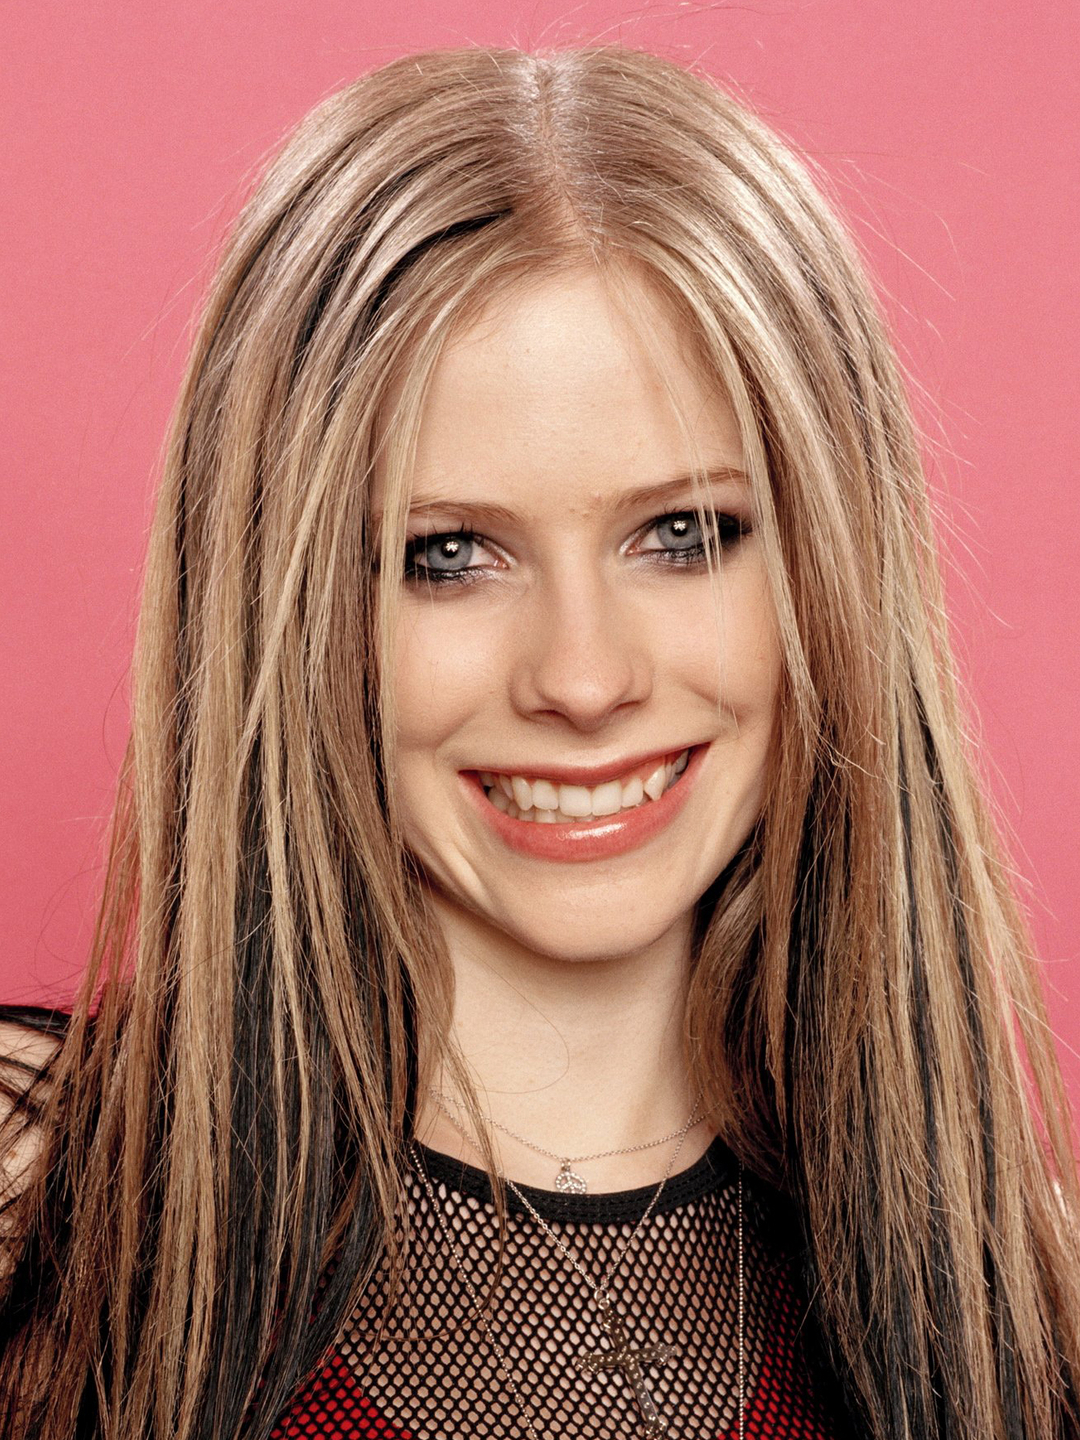 Avril Lavigne early childhood